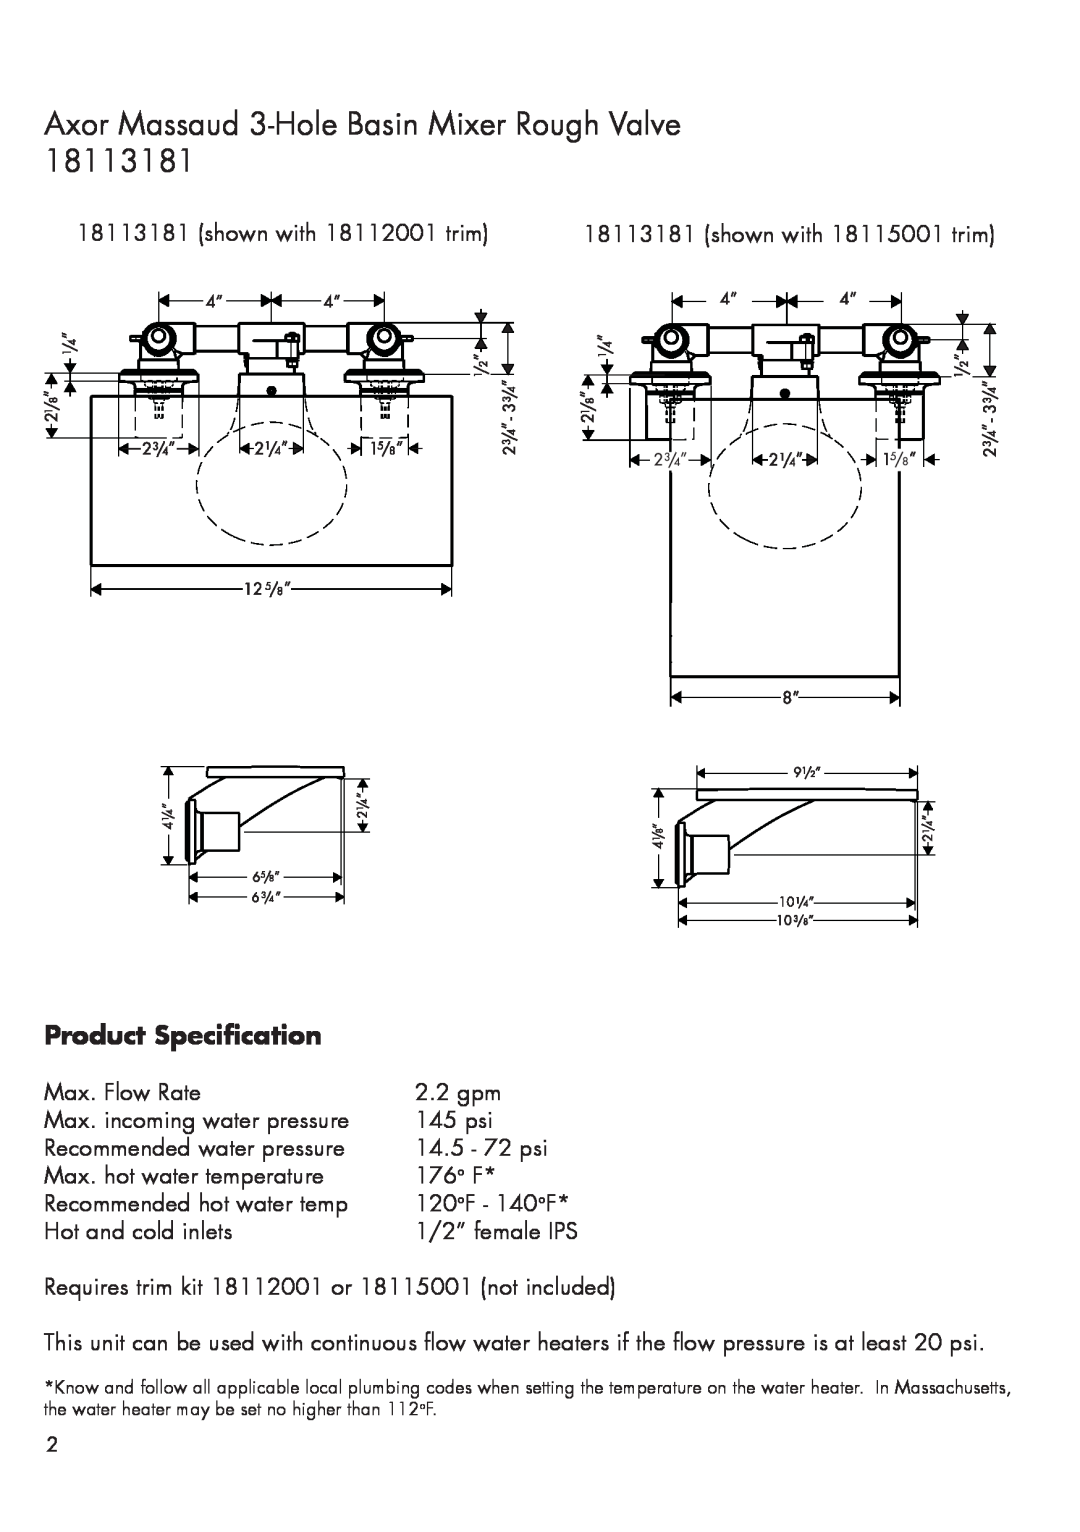 Axor 18113181 installation instructions Product Specification, Axor Massaud 3-Hole Basin Mixer Rough Valve 